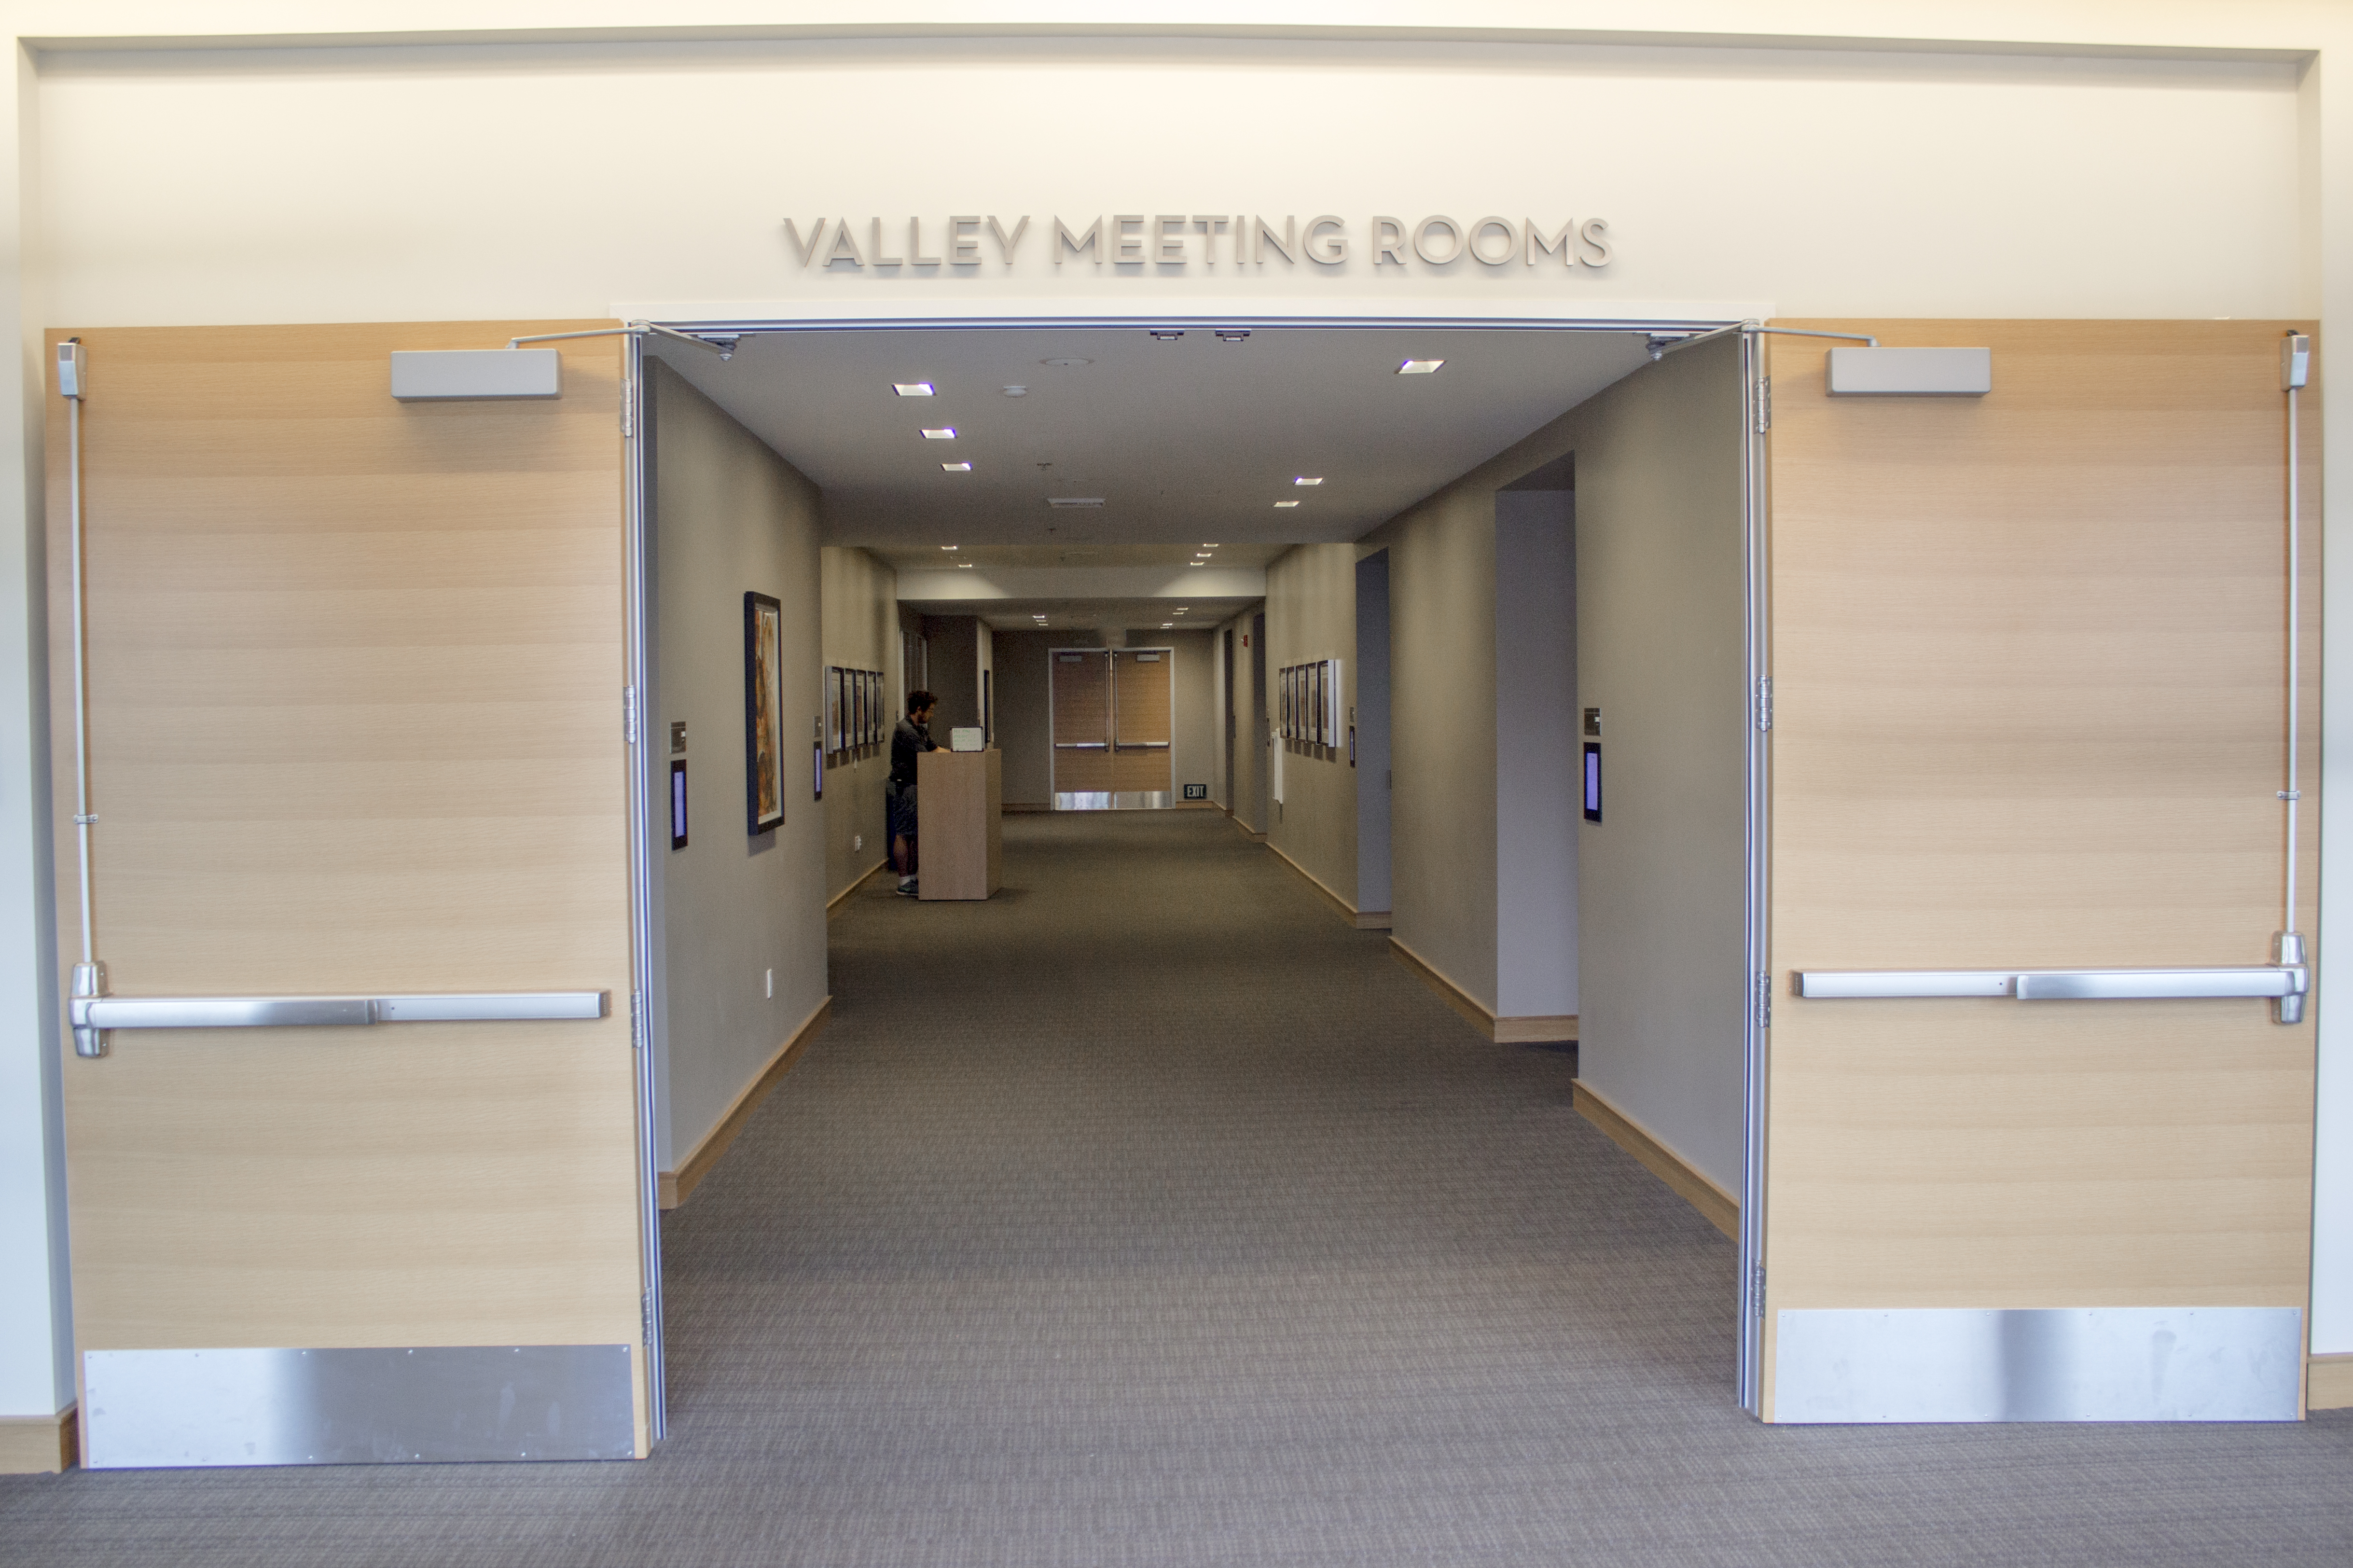 Valley Room Hallway